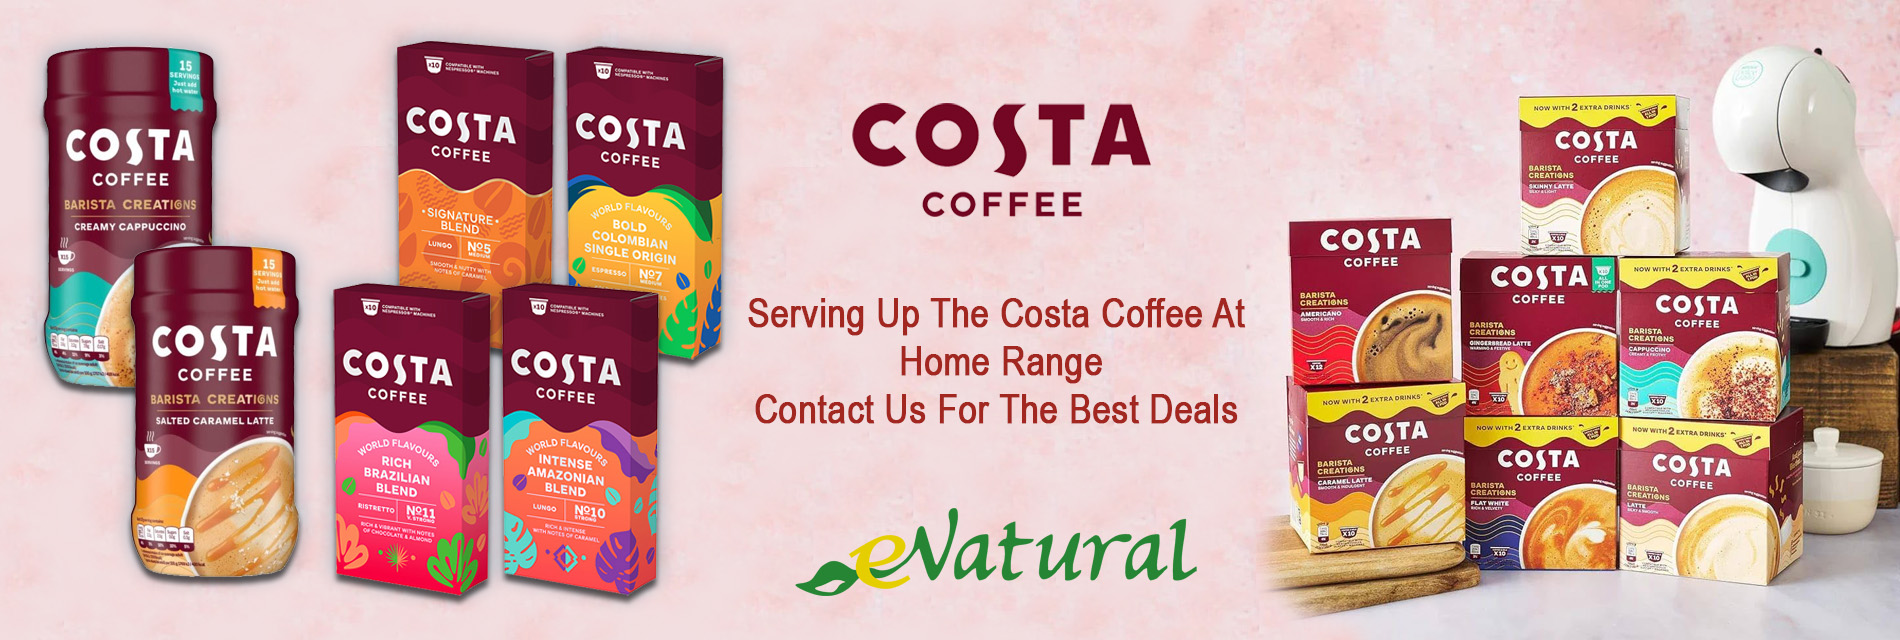 http://www.enaturalltd.com/?s=costa+coffee&post_type=product